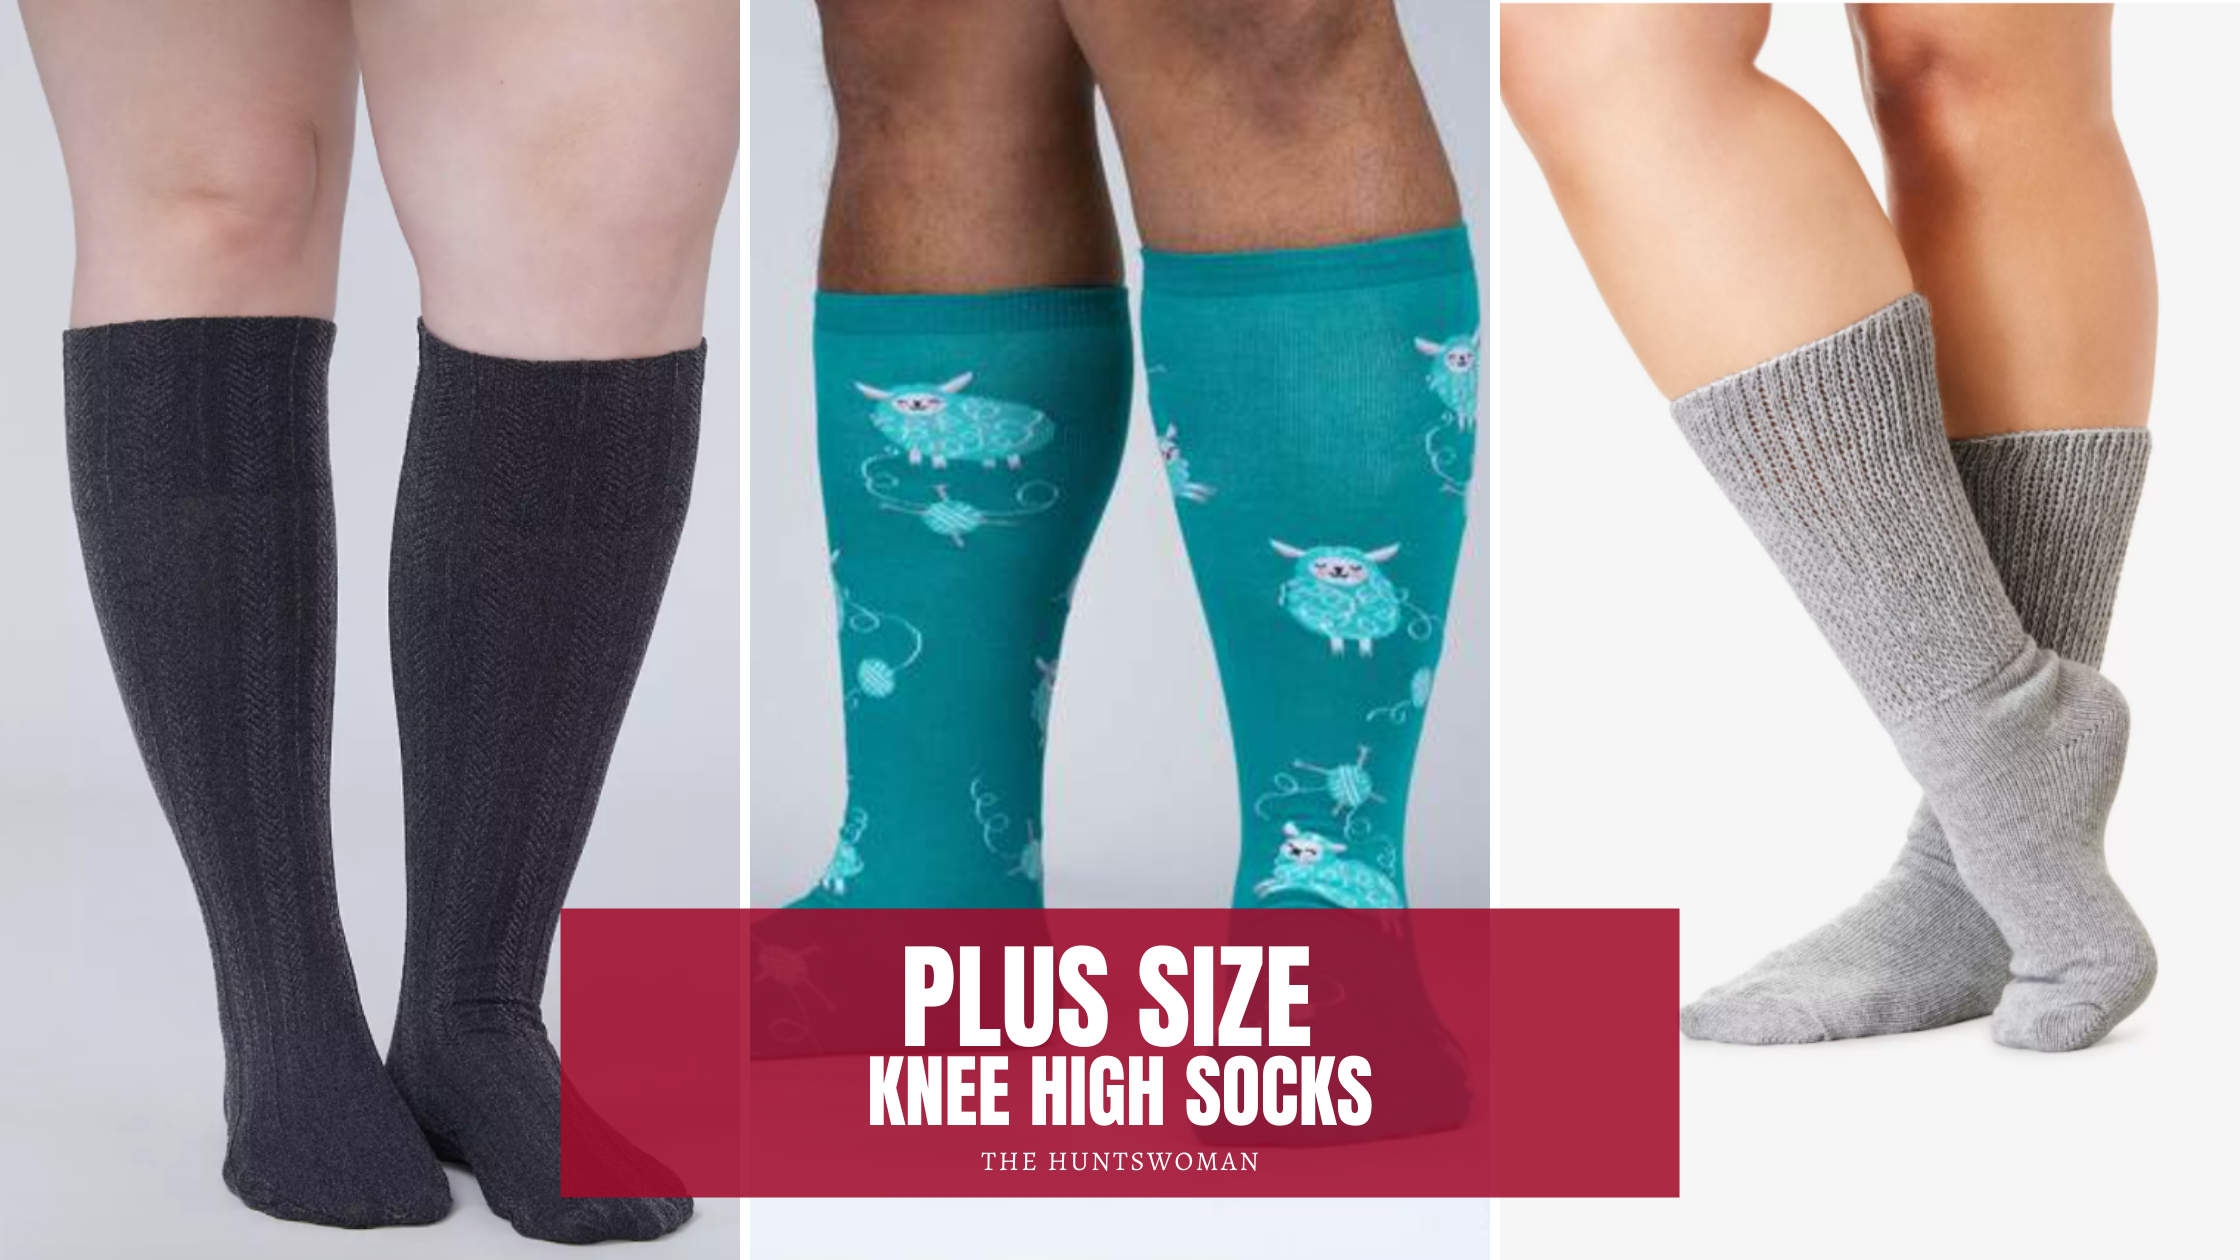 Plus Size Knee High Socks - 4+ Brands to Shop - The Huntswoman